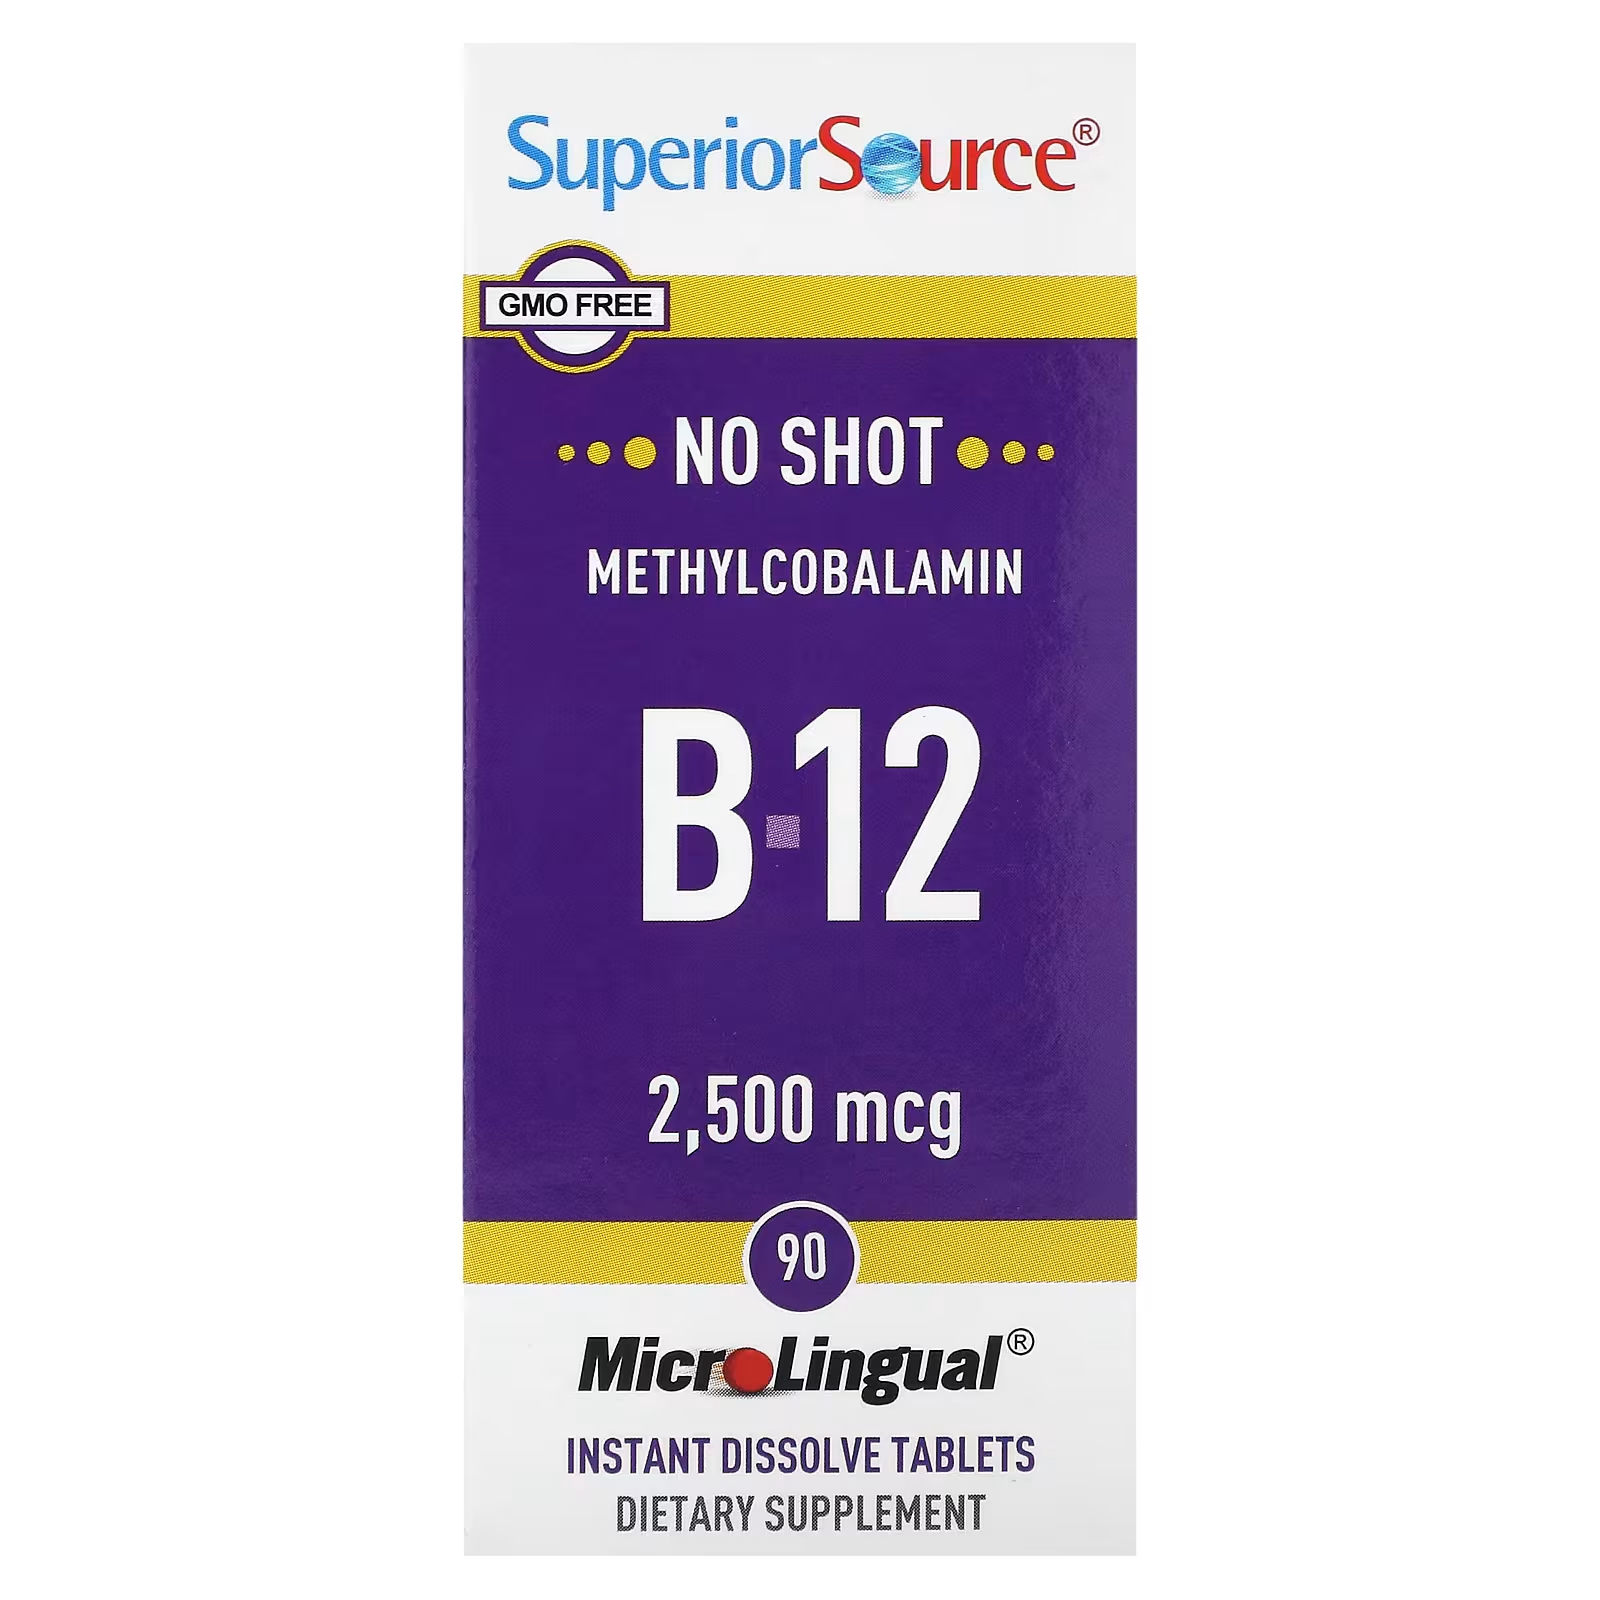 цена Метилкобаламин B-12 Superior Source, 90 растворяющихся таблеток